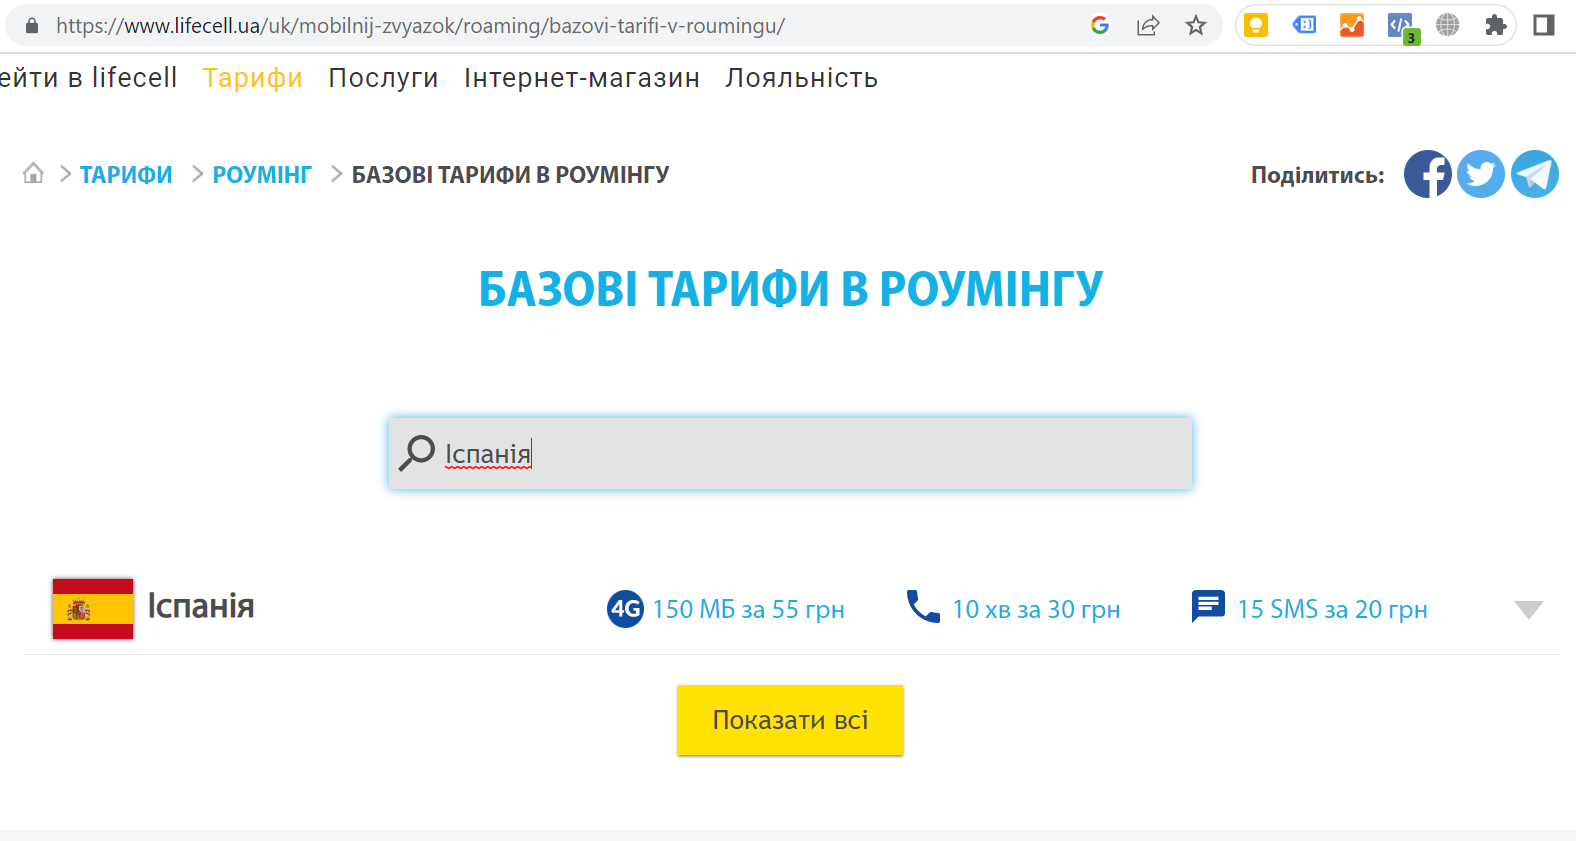 roaming v ispanii lifecell life ukraina bazovie tarifi 2